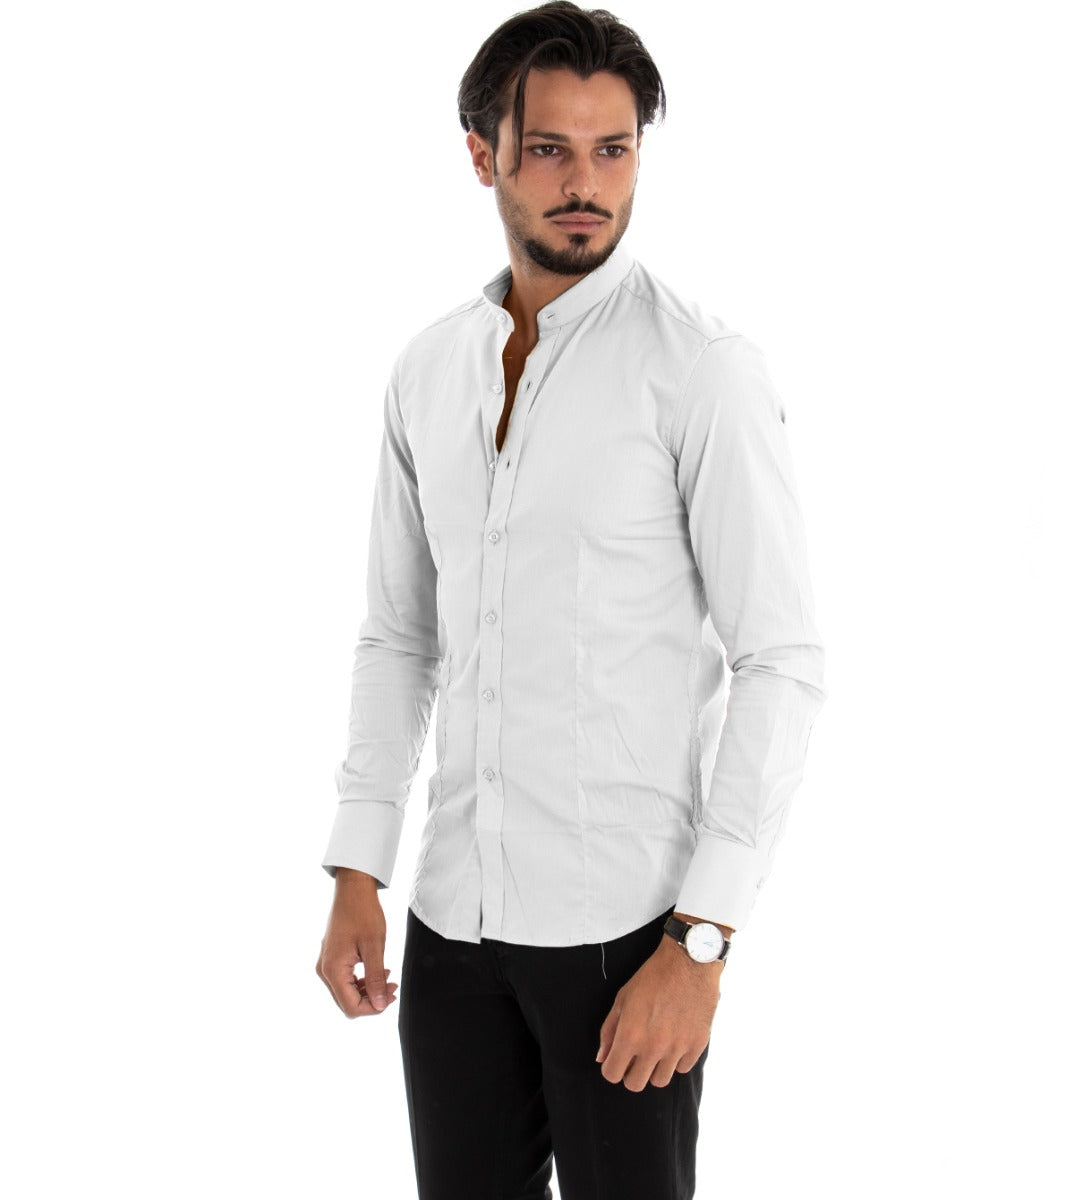 Men's Mandarin Collar Shirt Long Sleeve Slim Fit Basic Casual White Cotton GIOSAL-C1821A